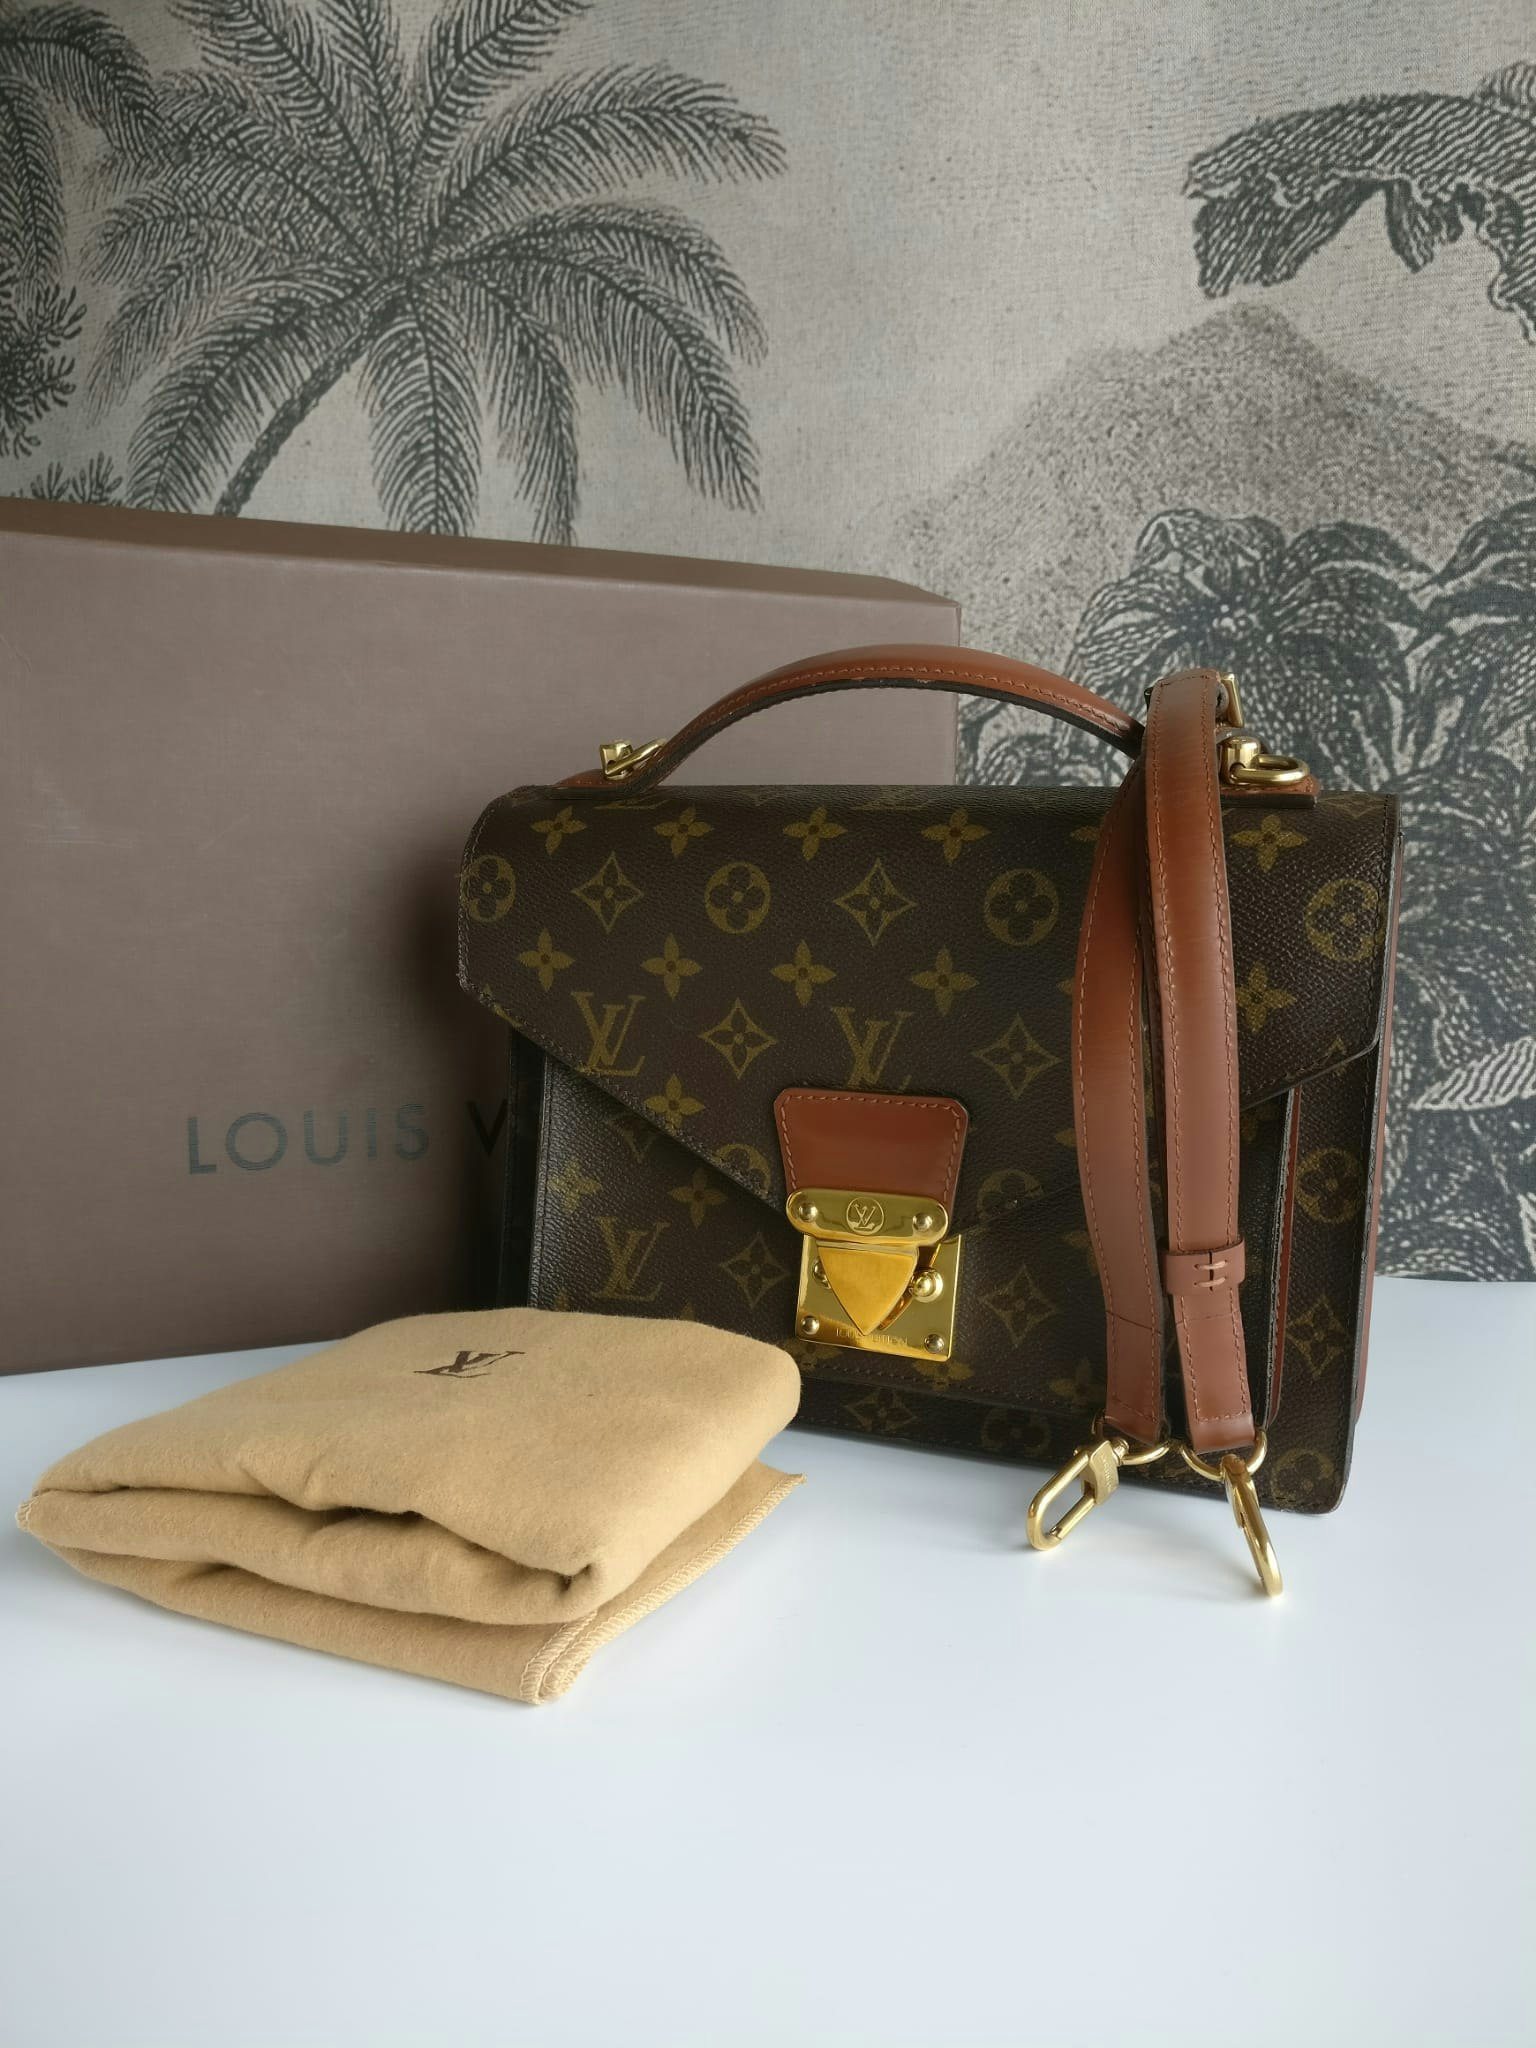 Louis Vuitton Monceau 26– Pom's ReLuxed